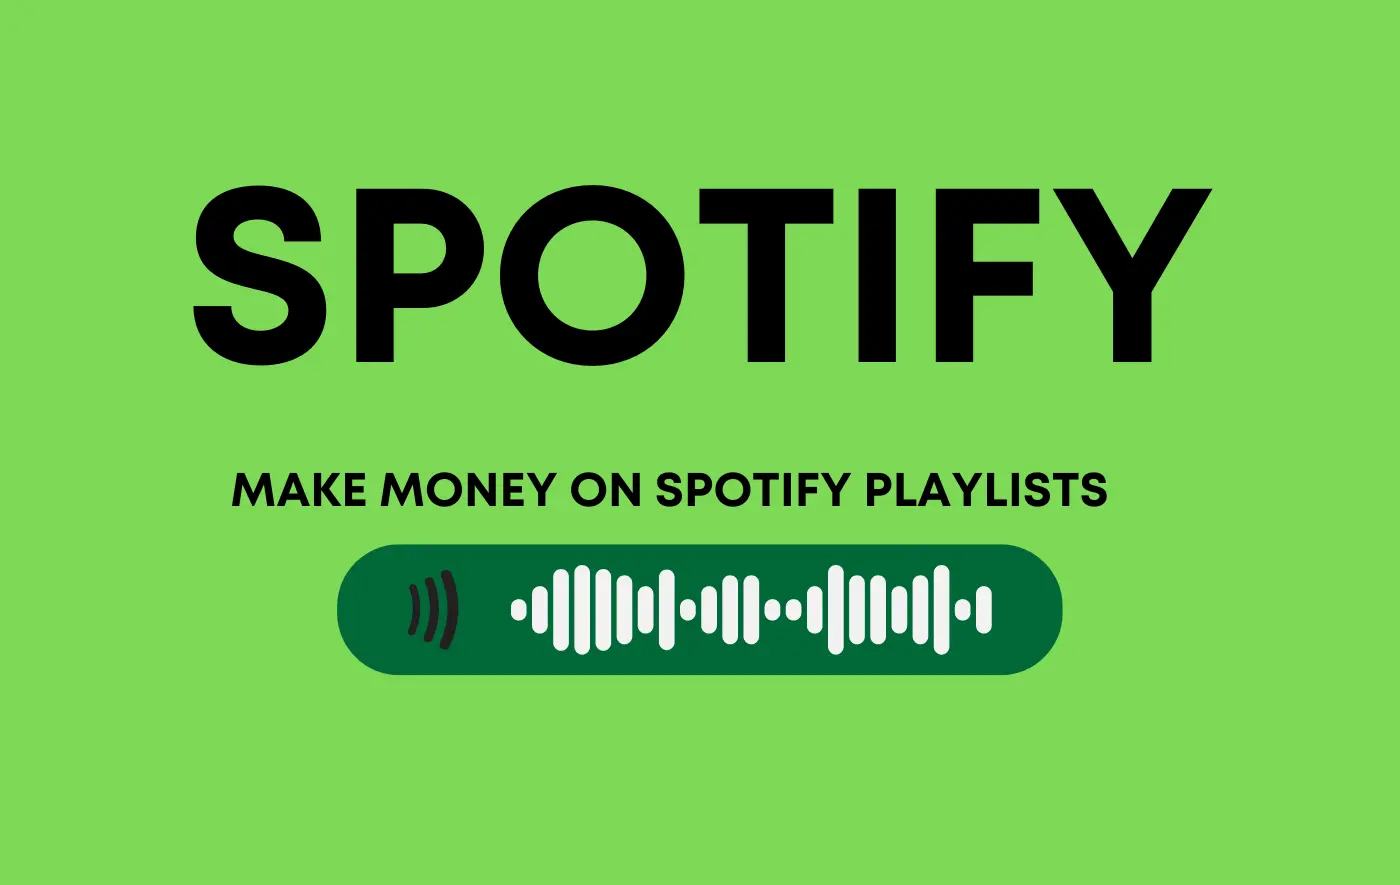 How to Make Money on Spotify Playlists